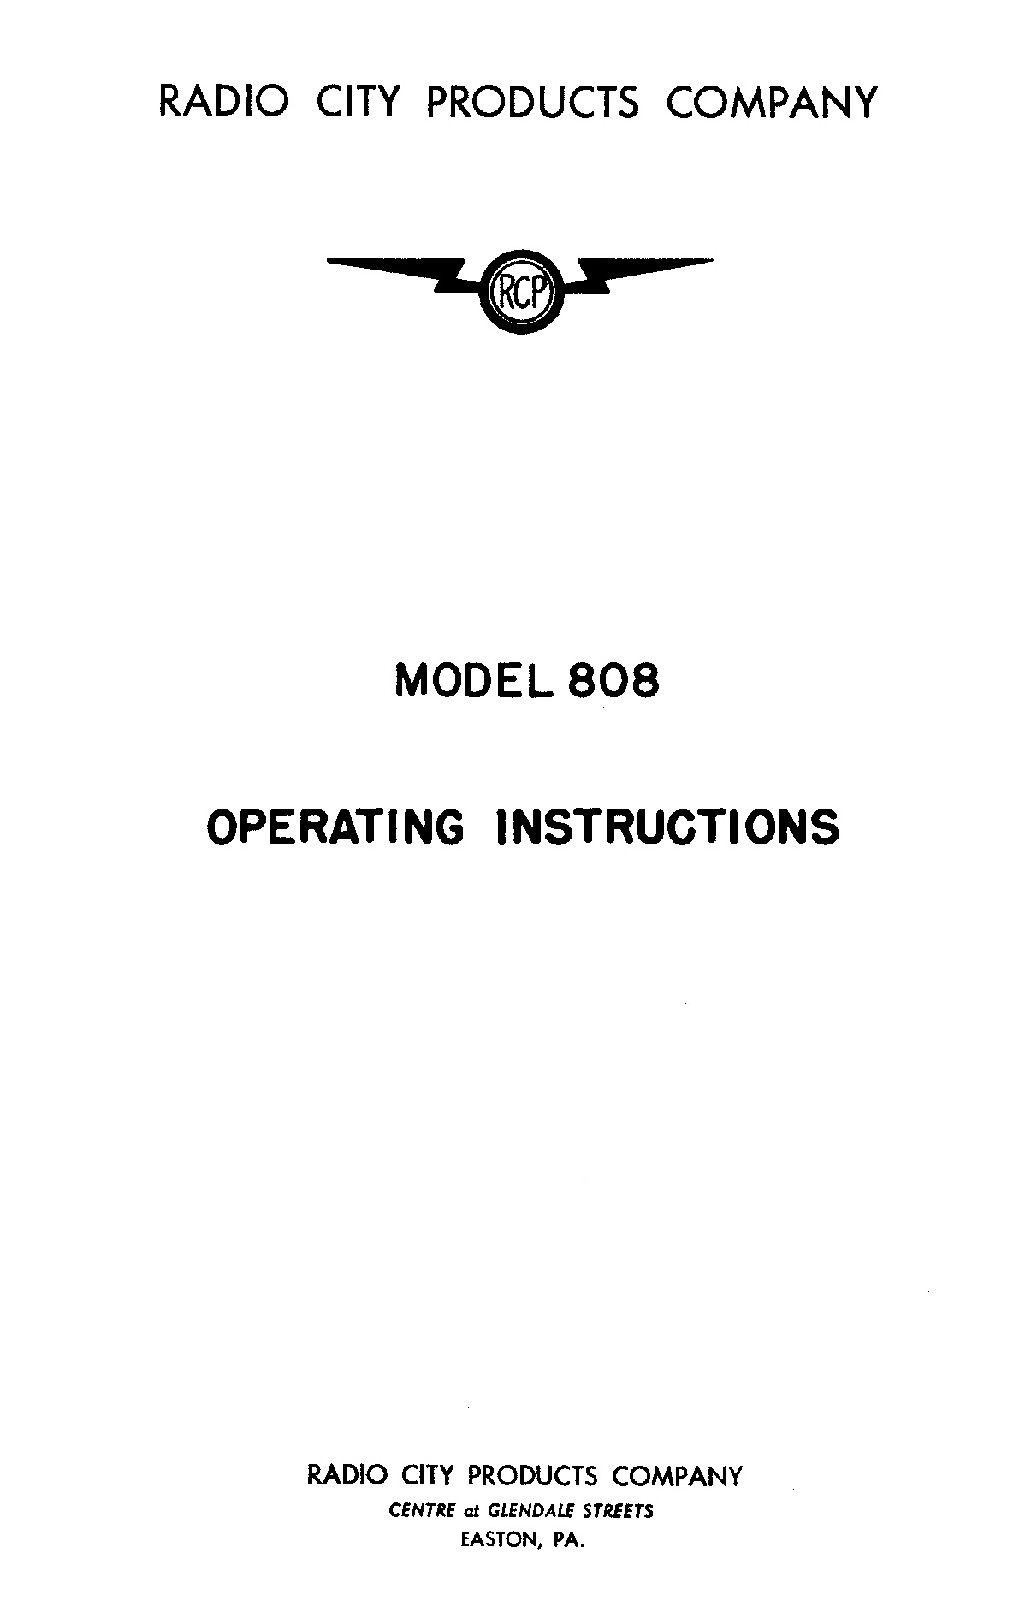 RCP 322 322A 802NA Tube Tester Manual 